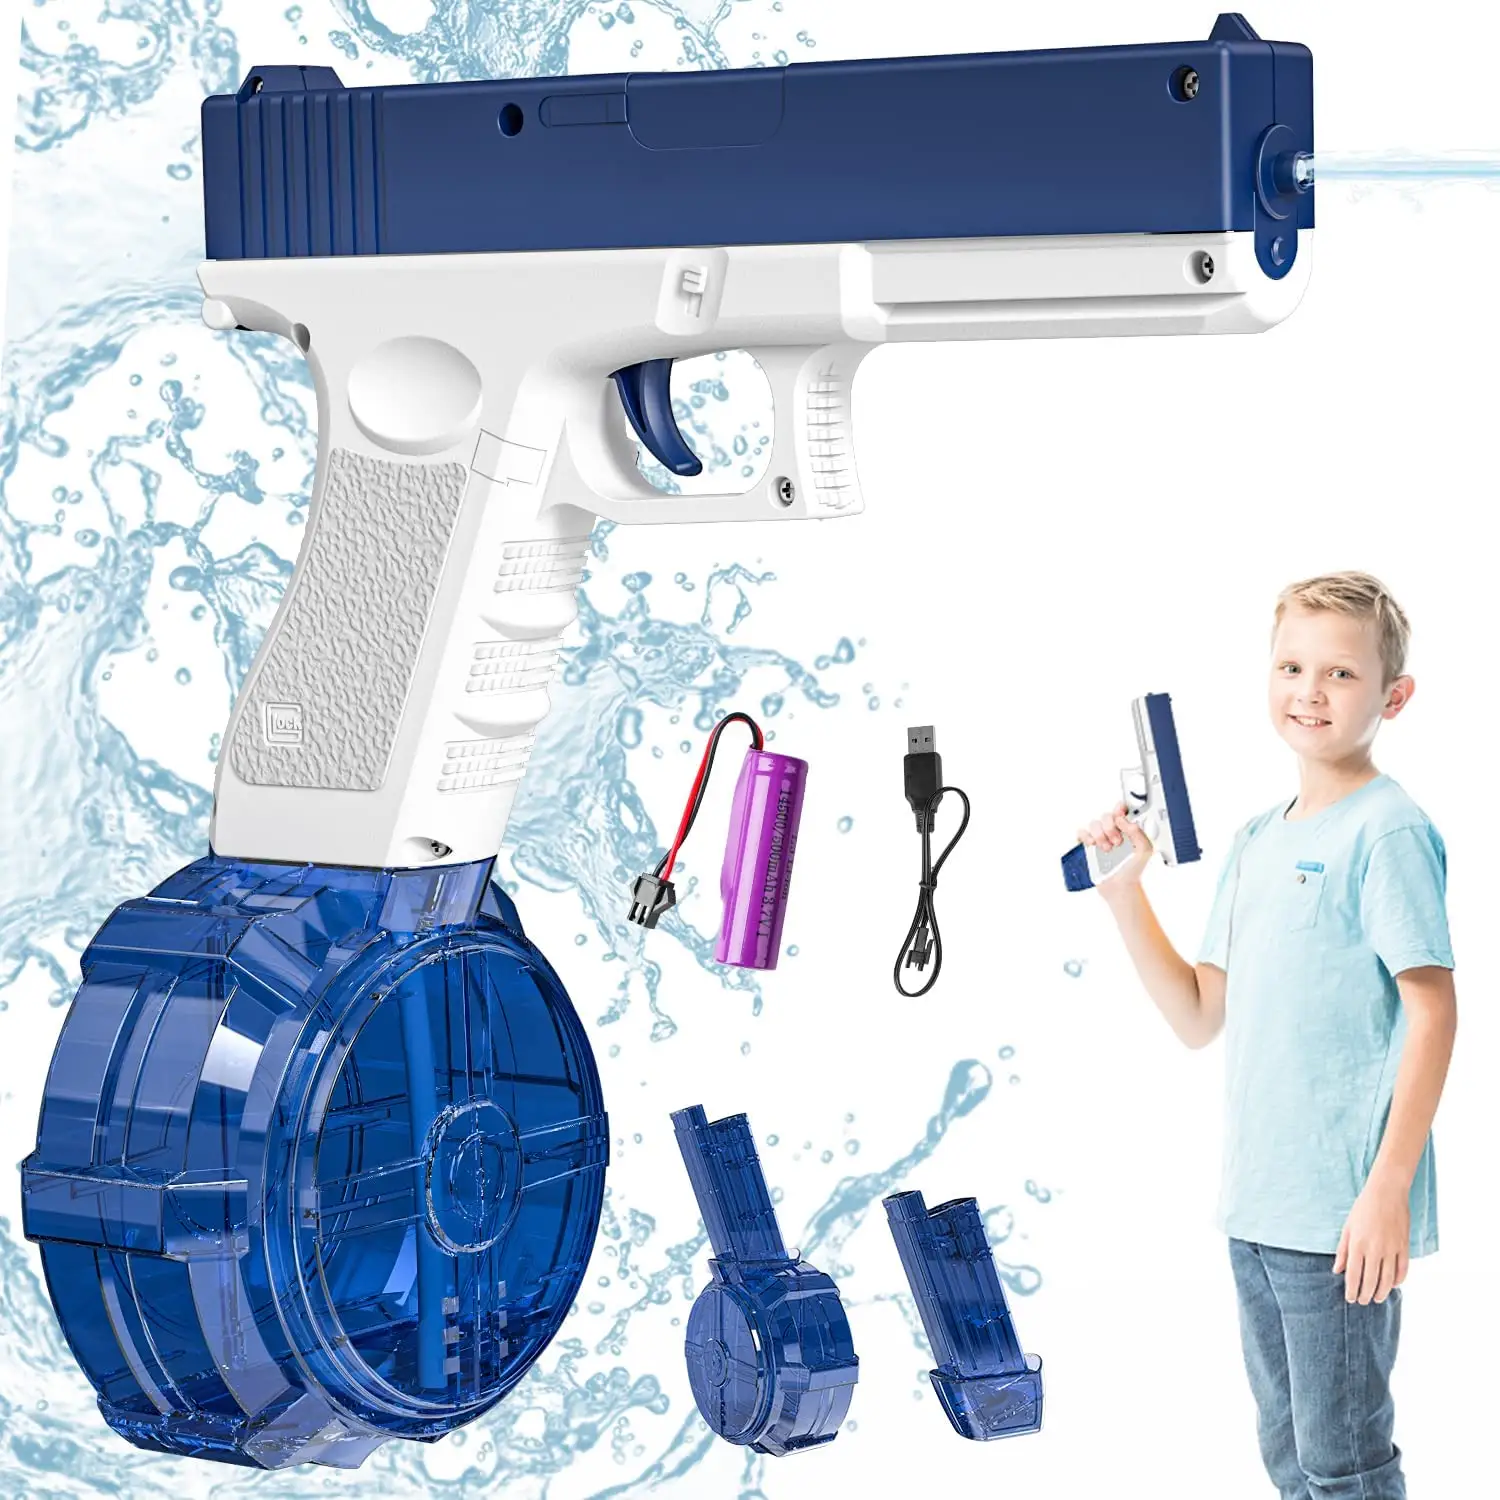 High Capacity Automatic Electric Water Gun Burst Blaster Battery Powered Long Range Glock Water Gun Outdoor Summer Toys